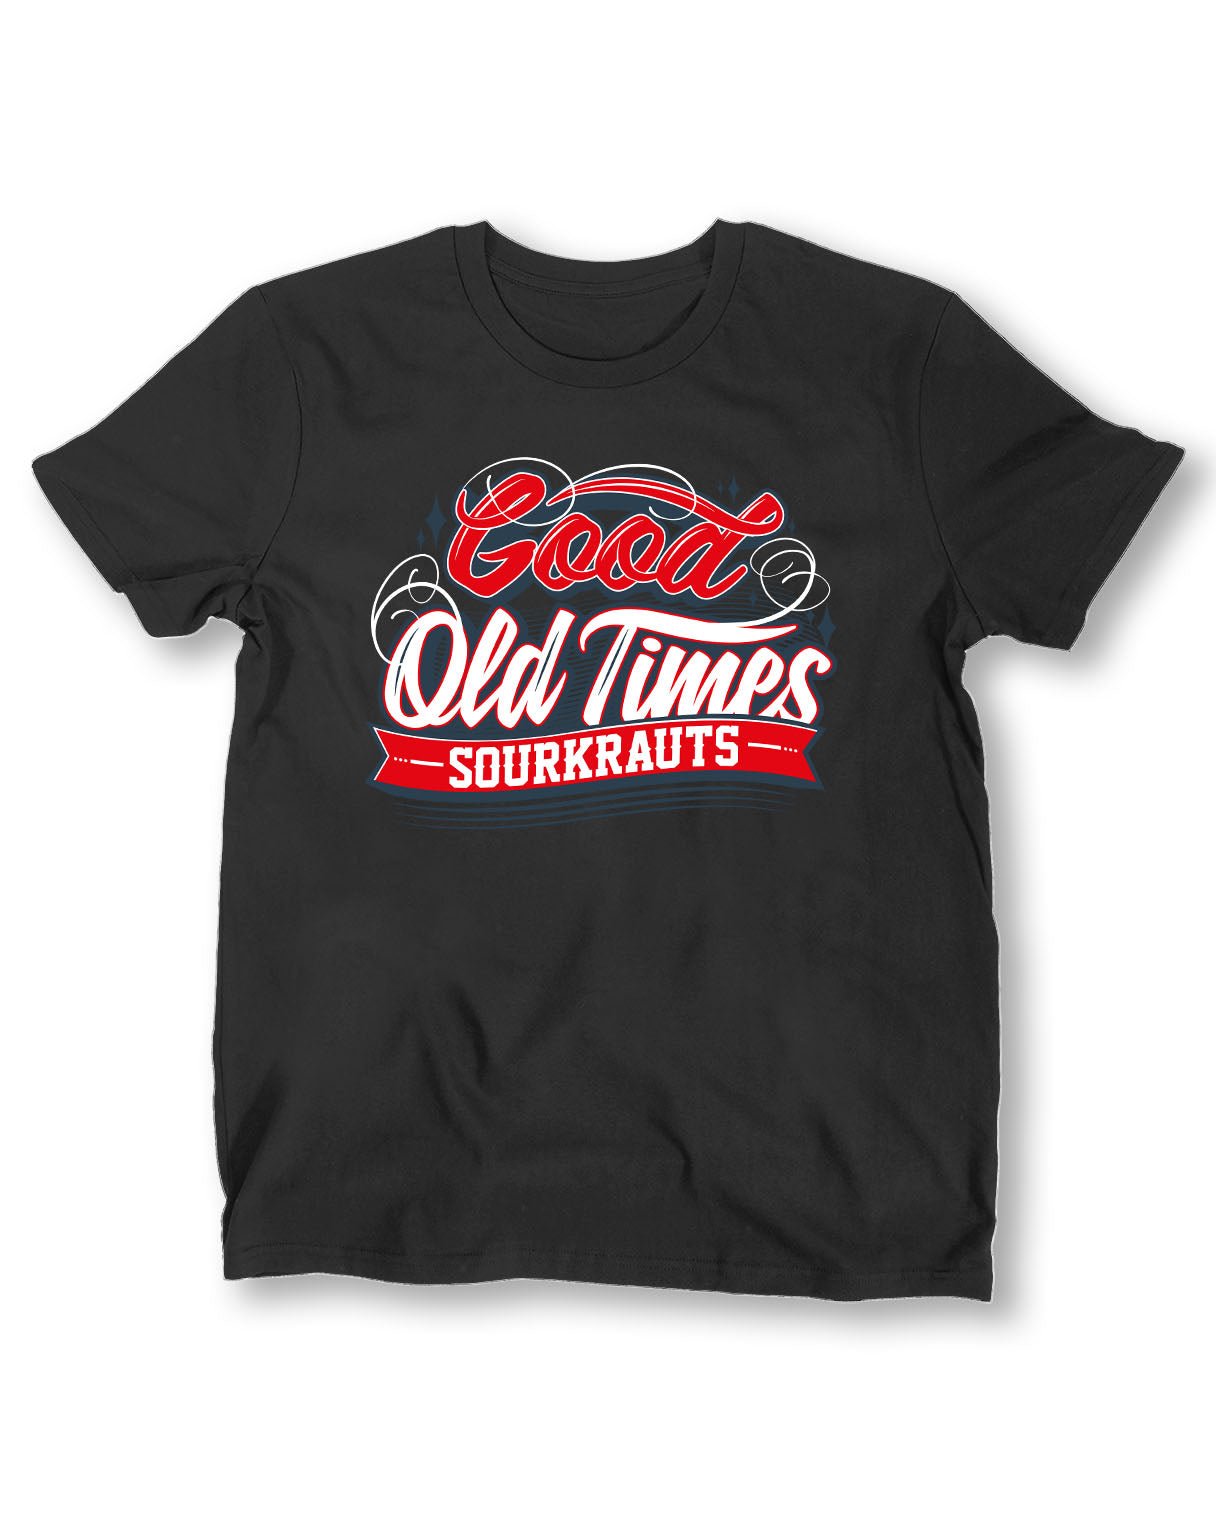 Good Old Times I T-Shirt I 2013 - Sourkrauts Classics